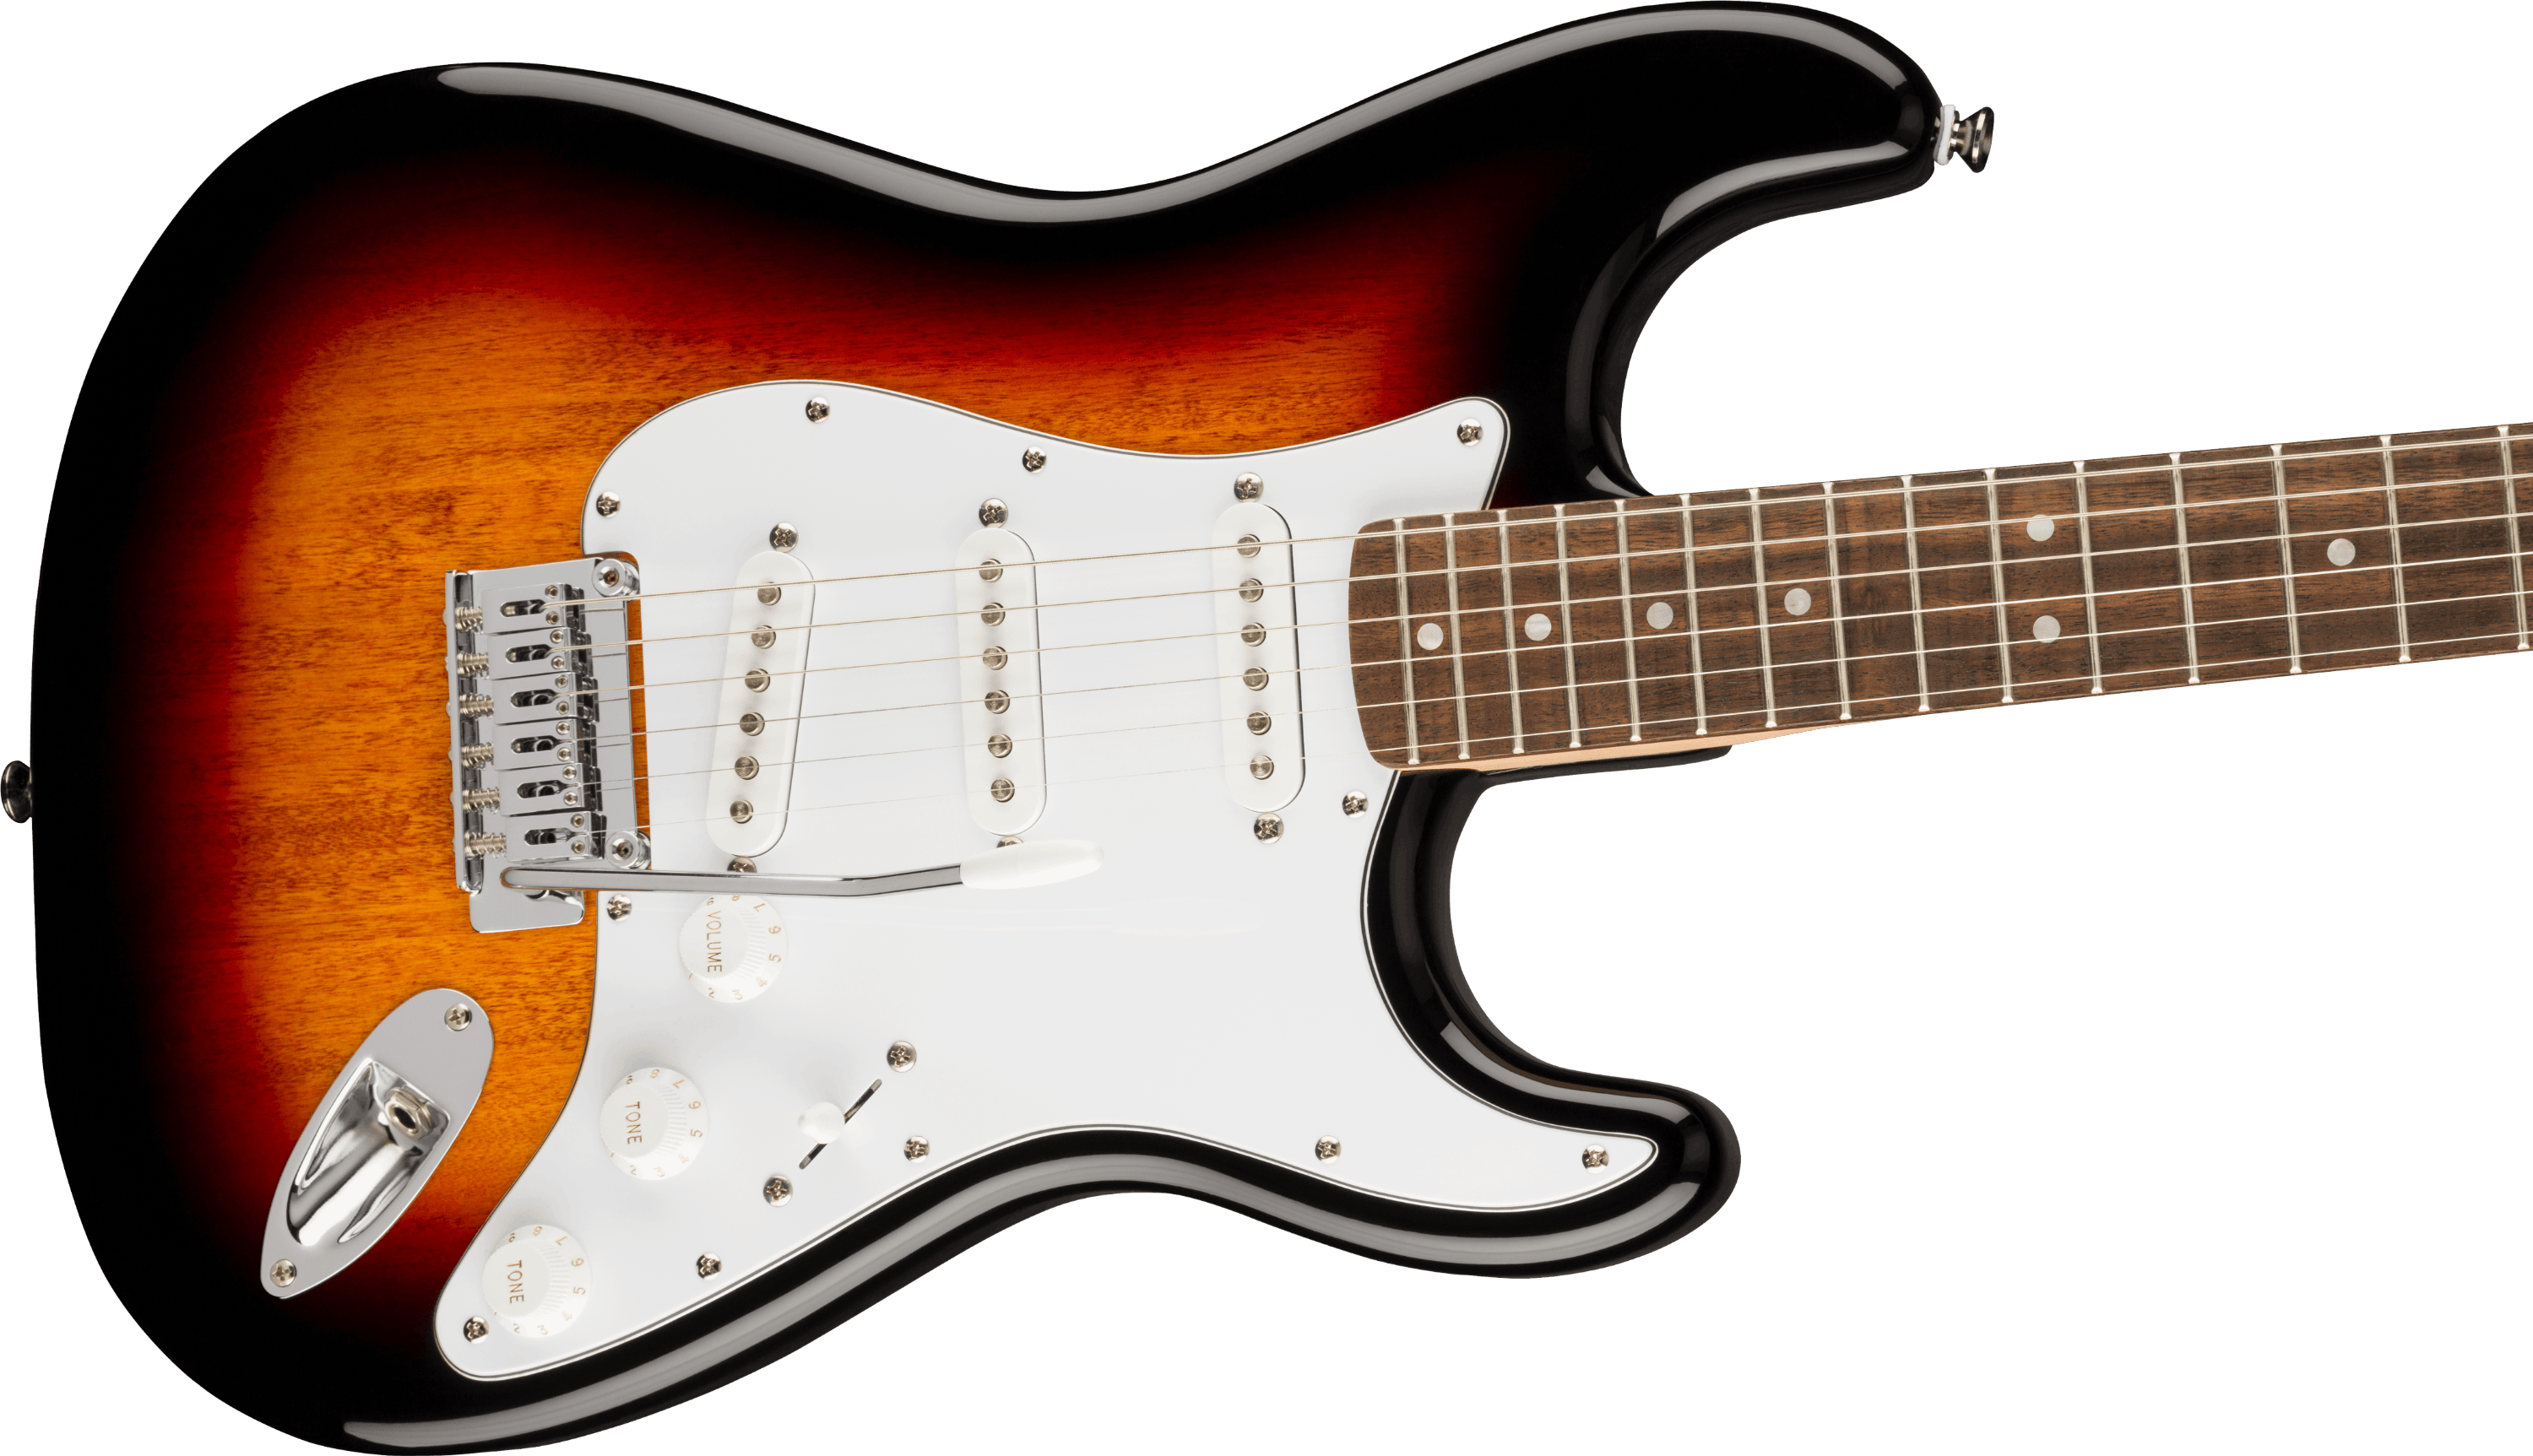 Squier Affinity Stratocaster Electric Guitar in 3-Colour Sunburst